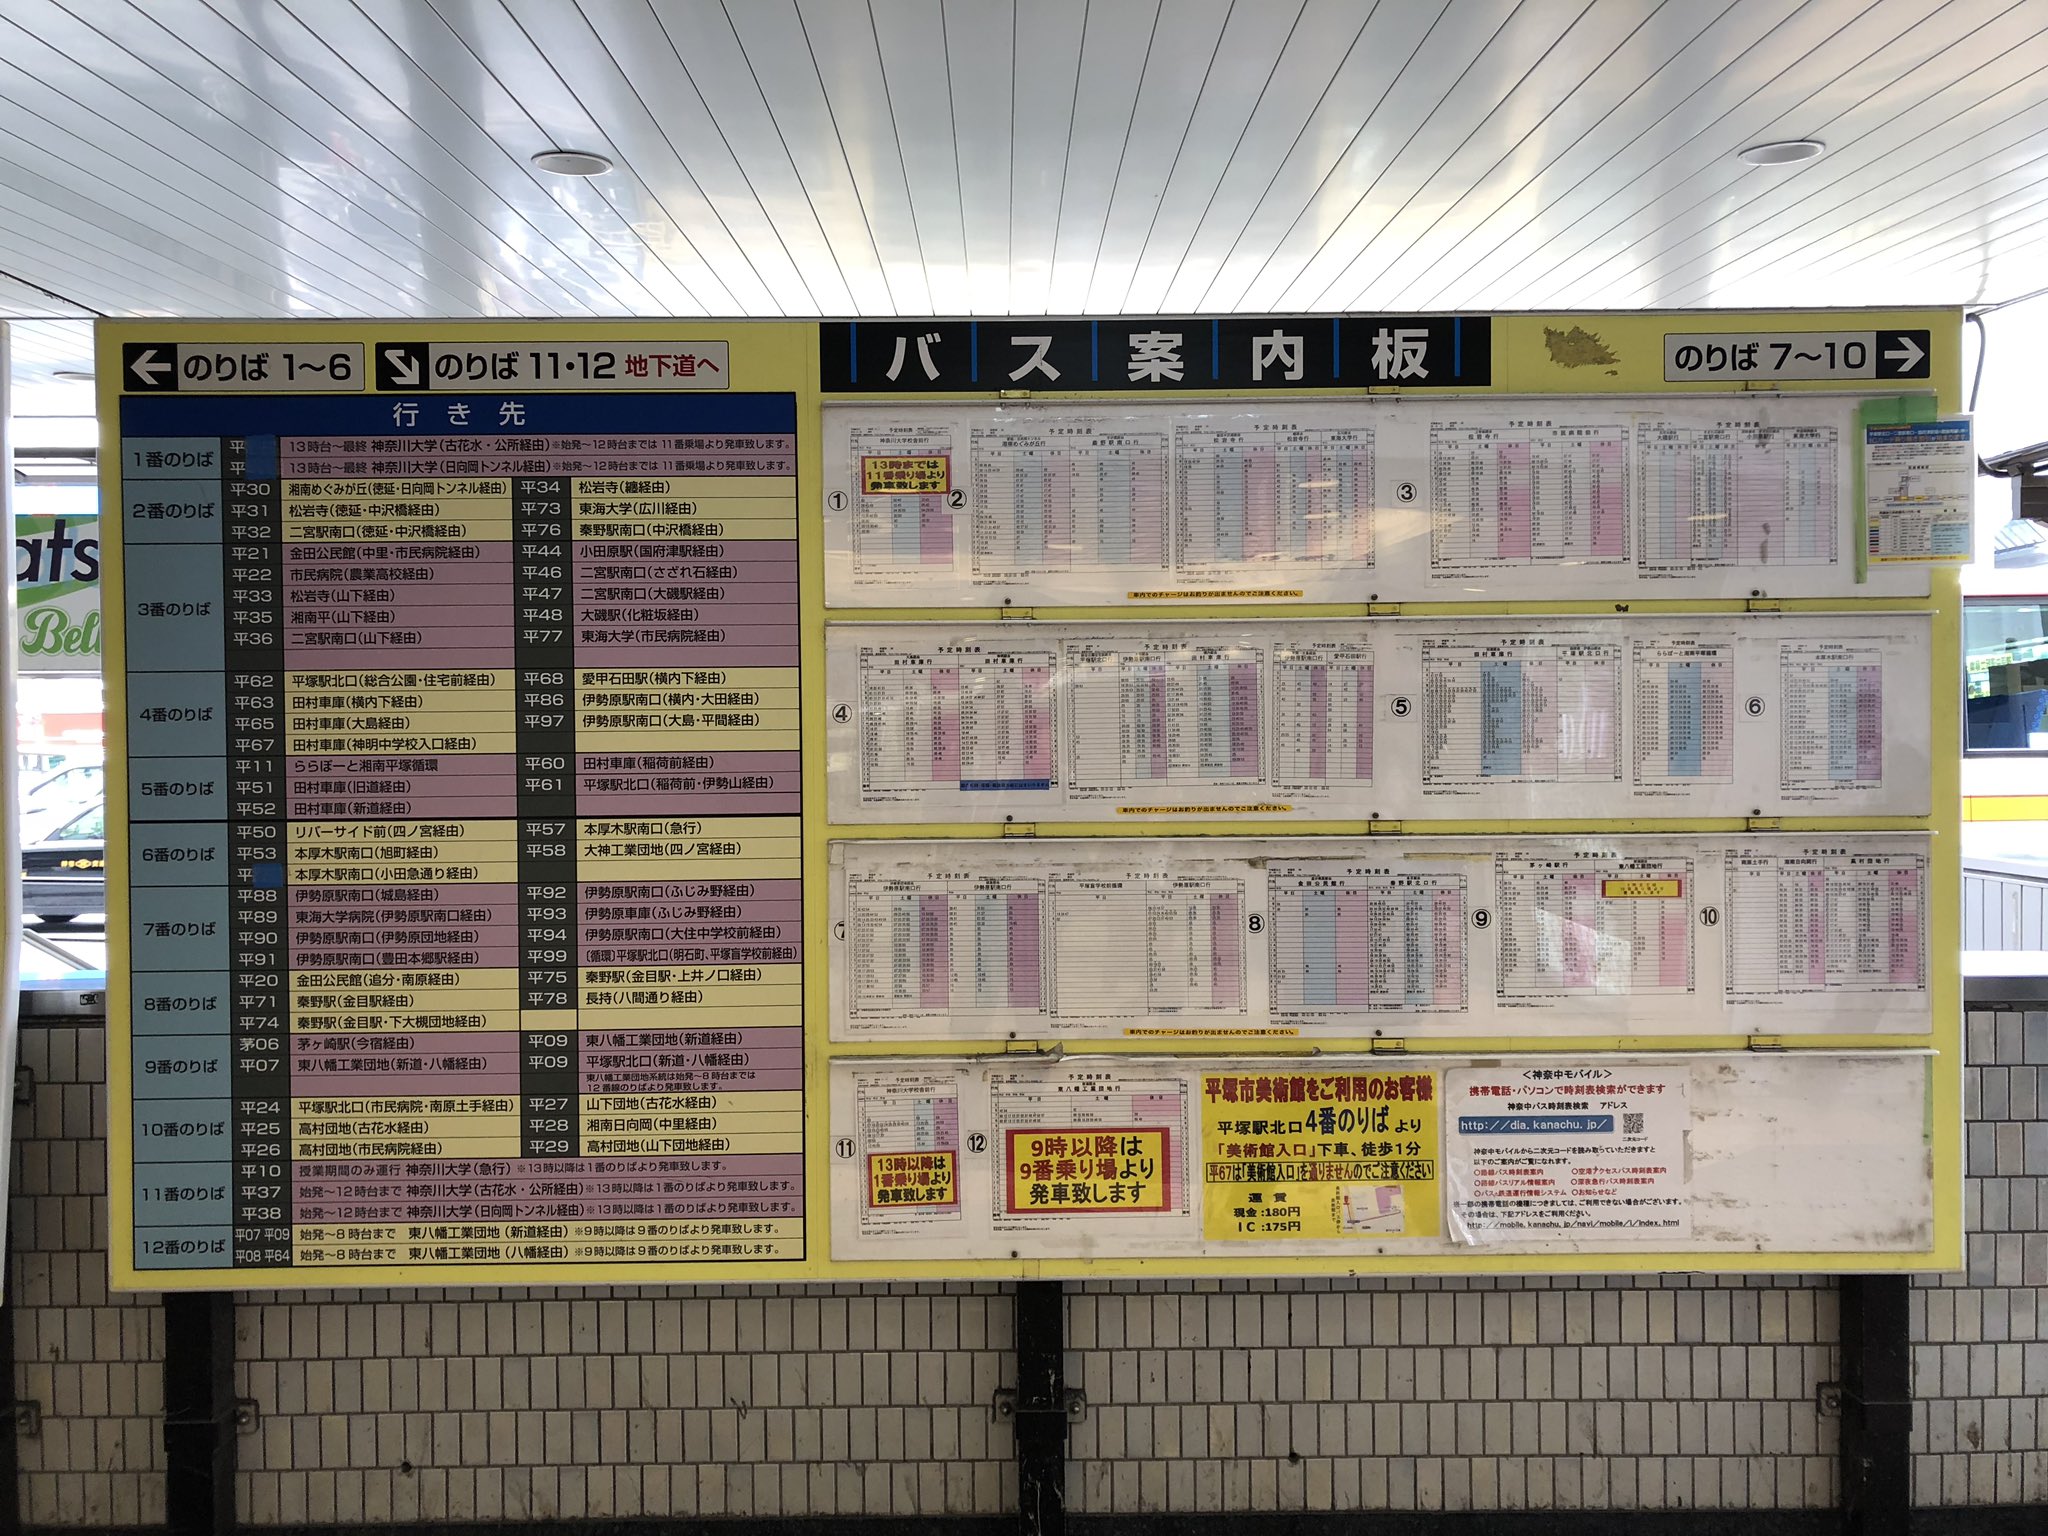 Hiro Murackami 平塚駅北口 相変わらずのバス案内板 終点と時刻表だけを見せられても 行きたいところにバス が行ってるかどうかが判らなければ バスに乗ろうかどうか決められないだろうに と思う